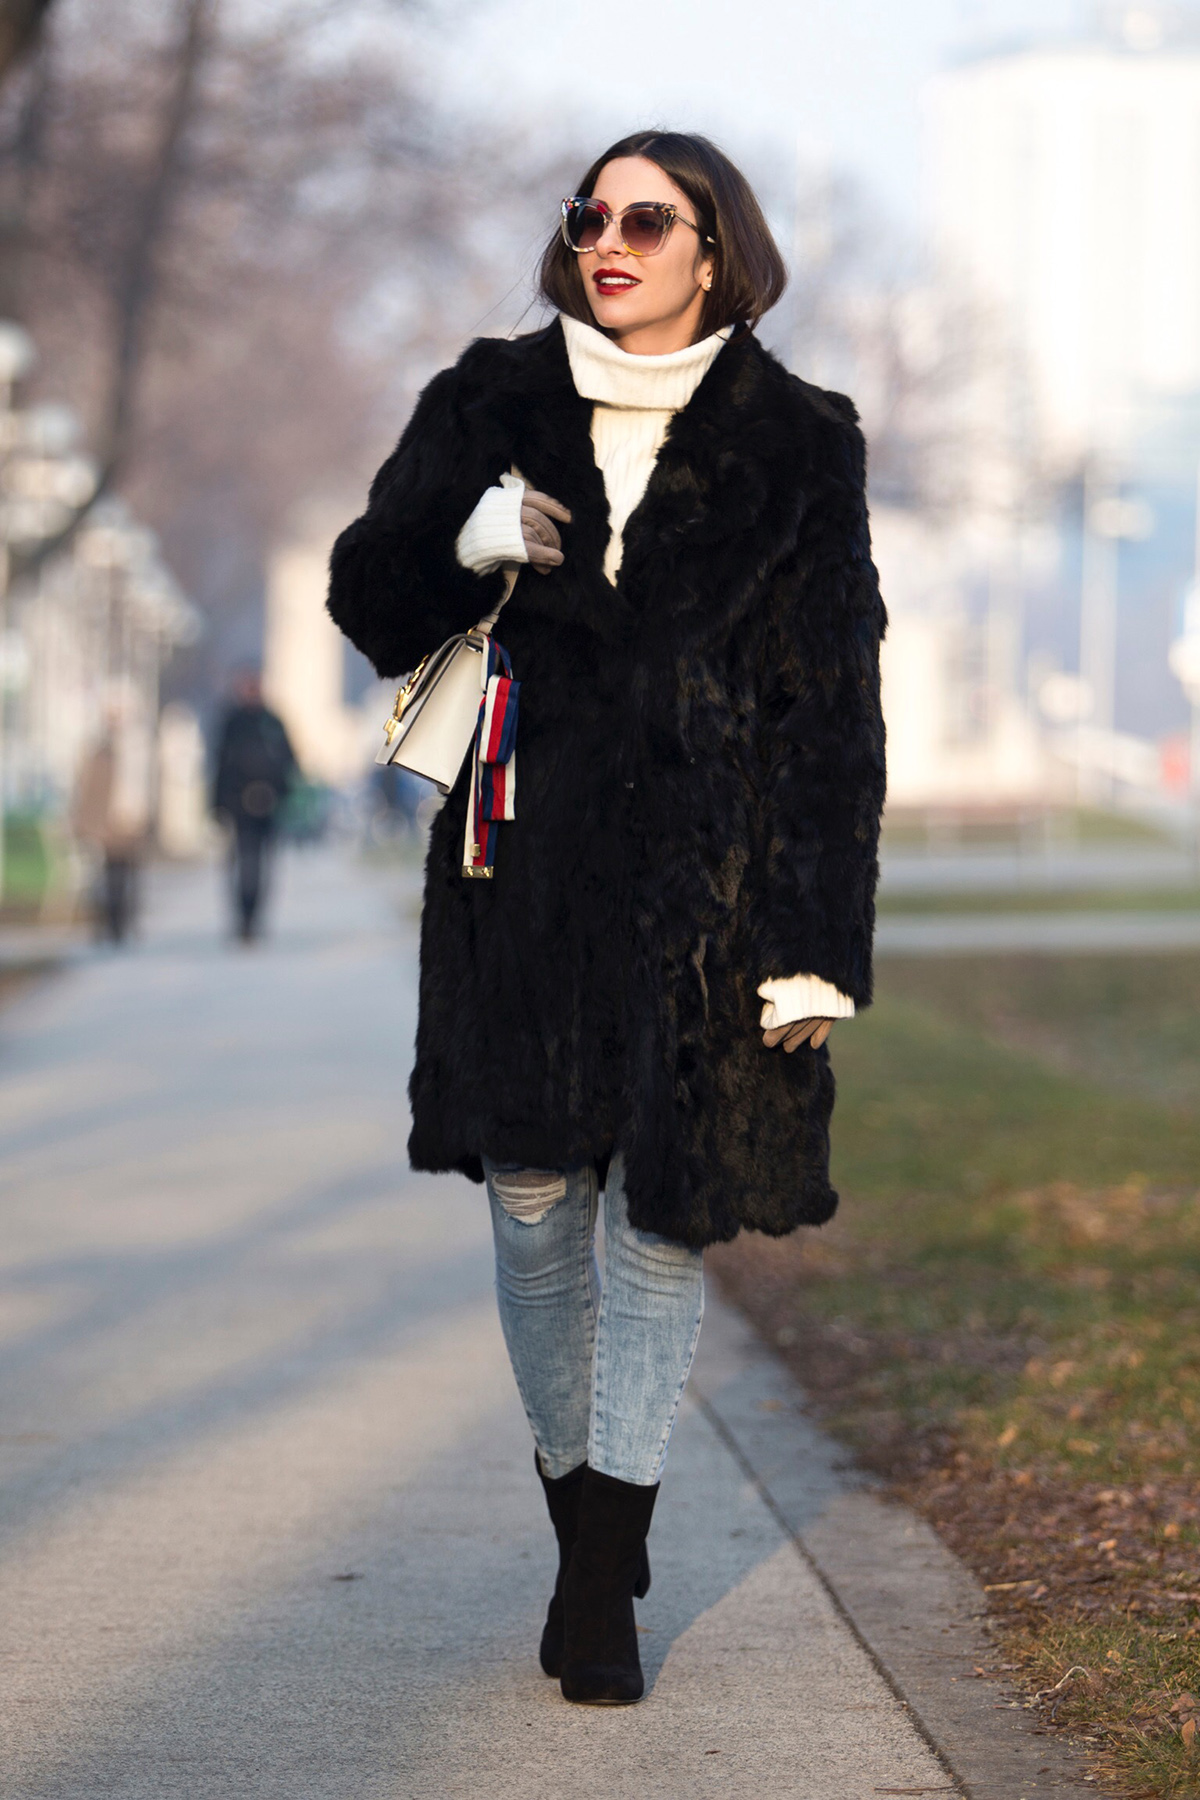 Gucci Sylvie Bag & Fur Coat In Vienna - Stella Asteria